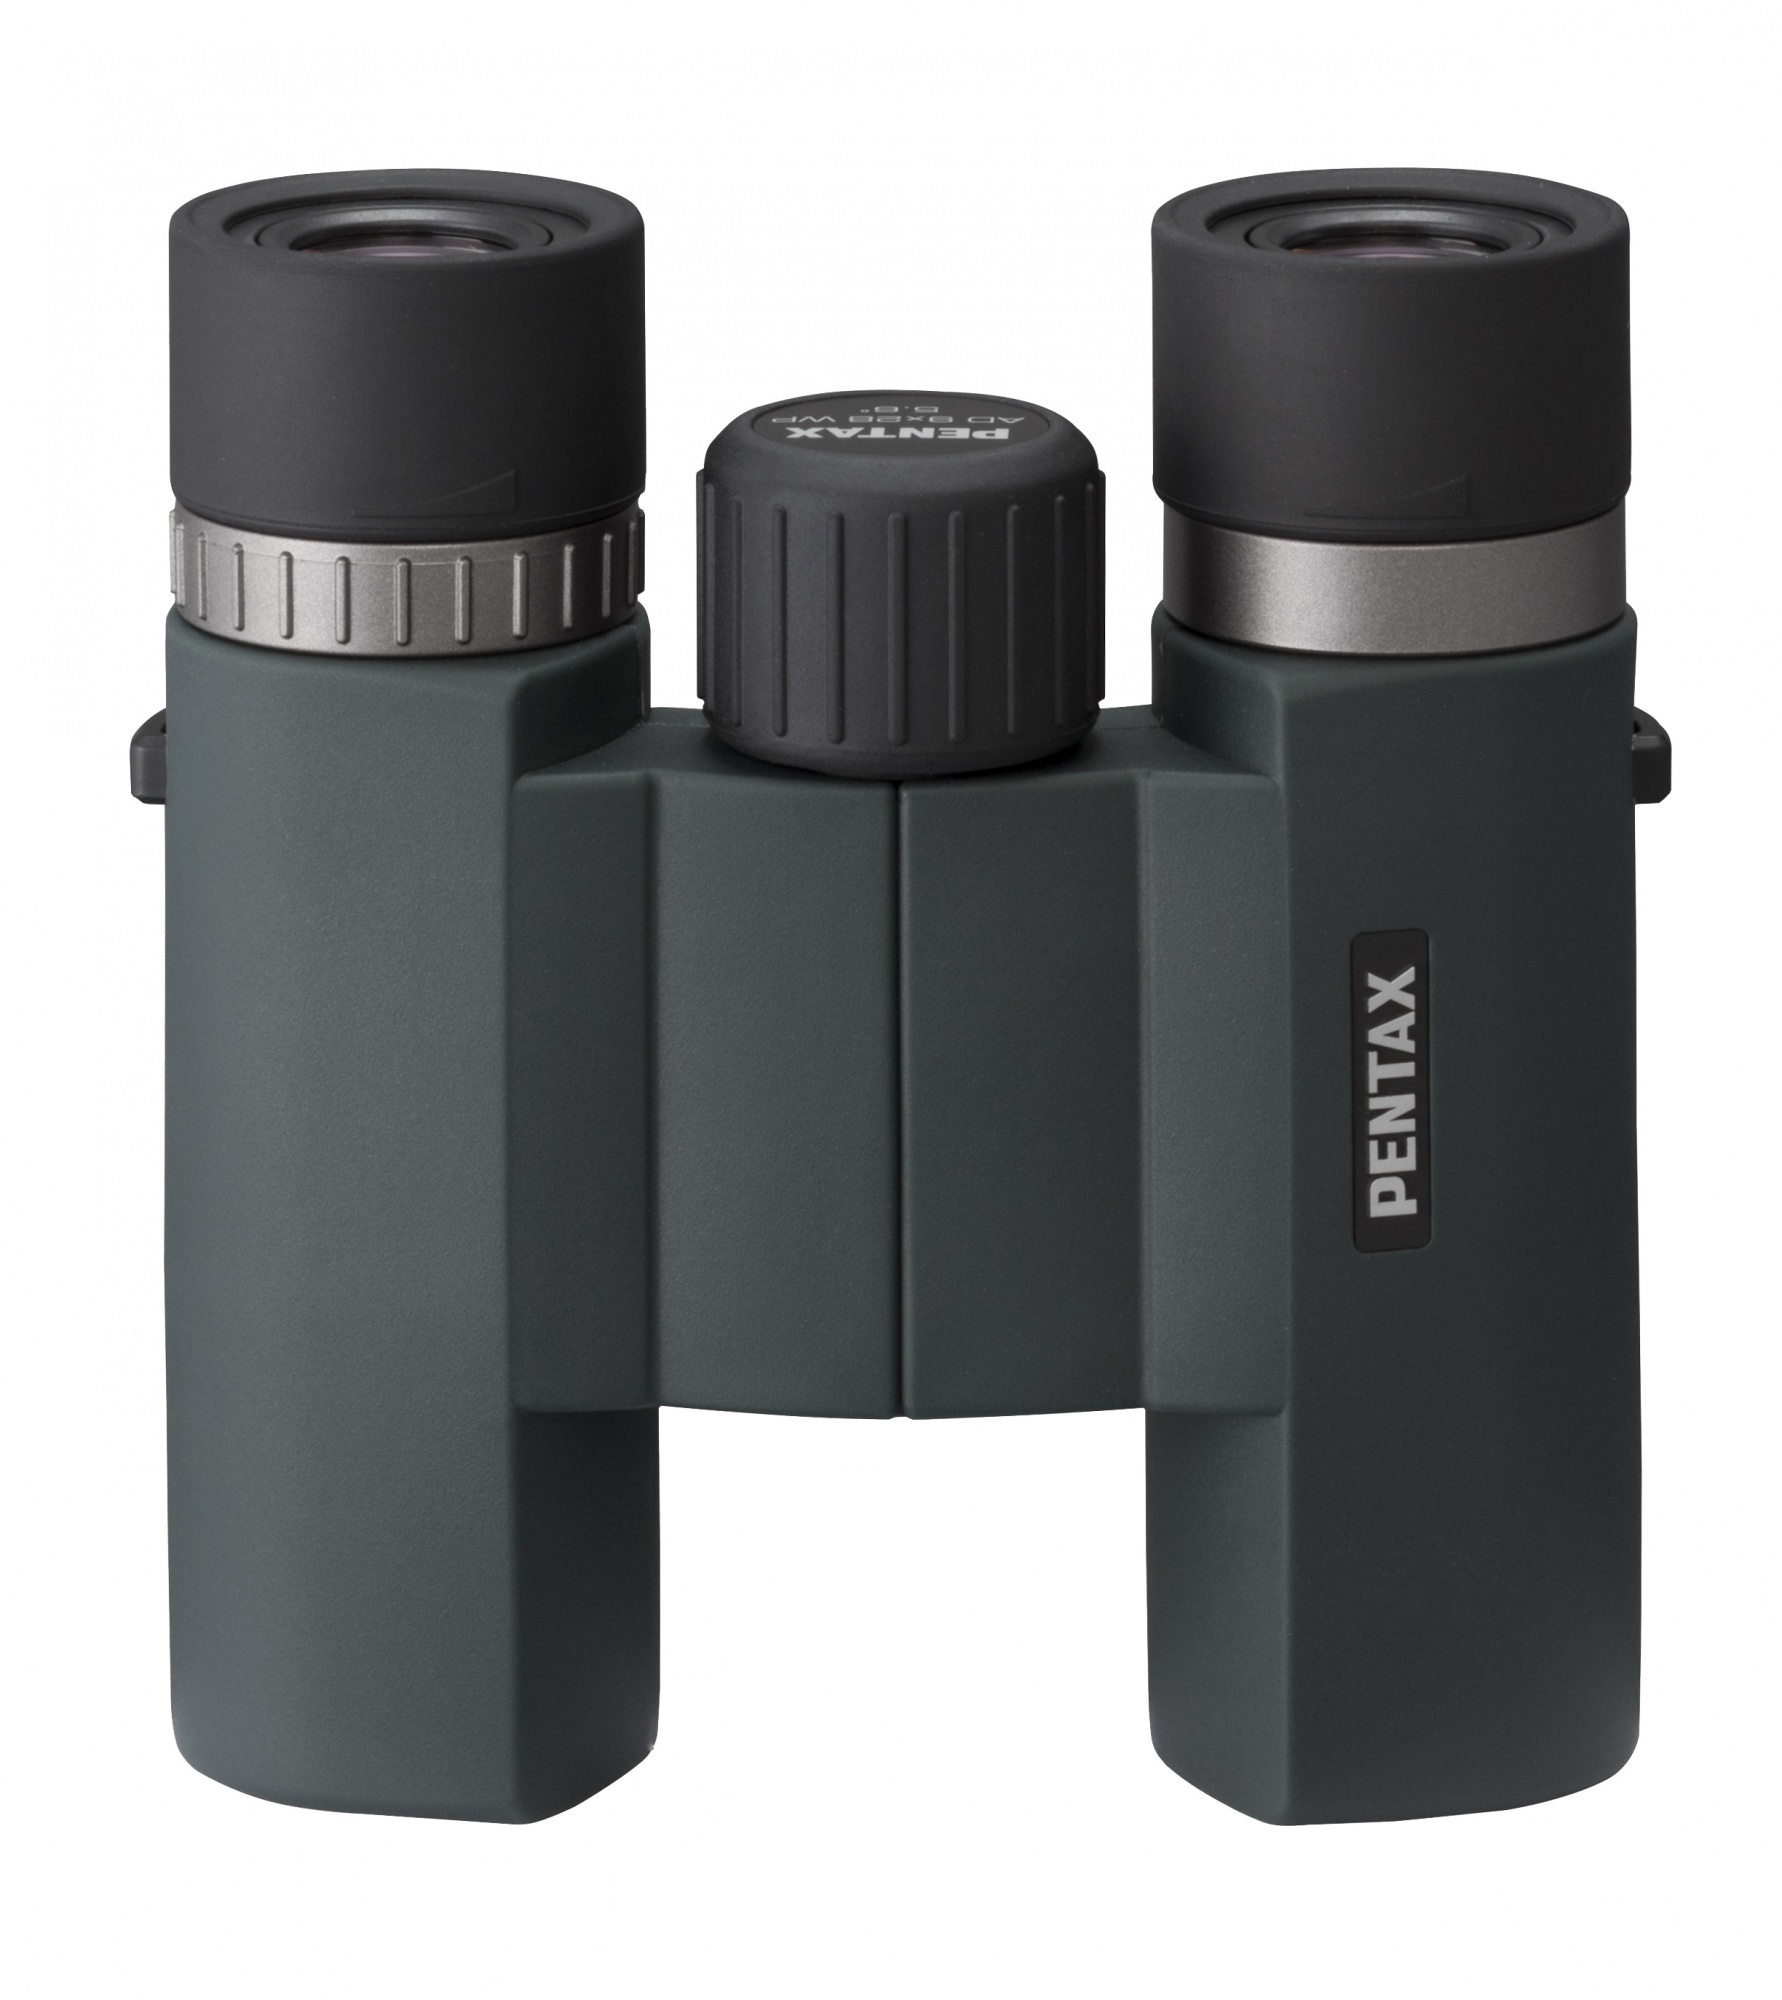 Pentax AD 9x28mm WP Binoculars